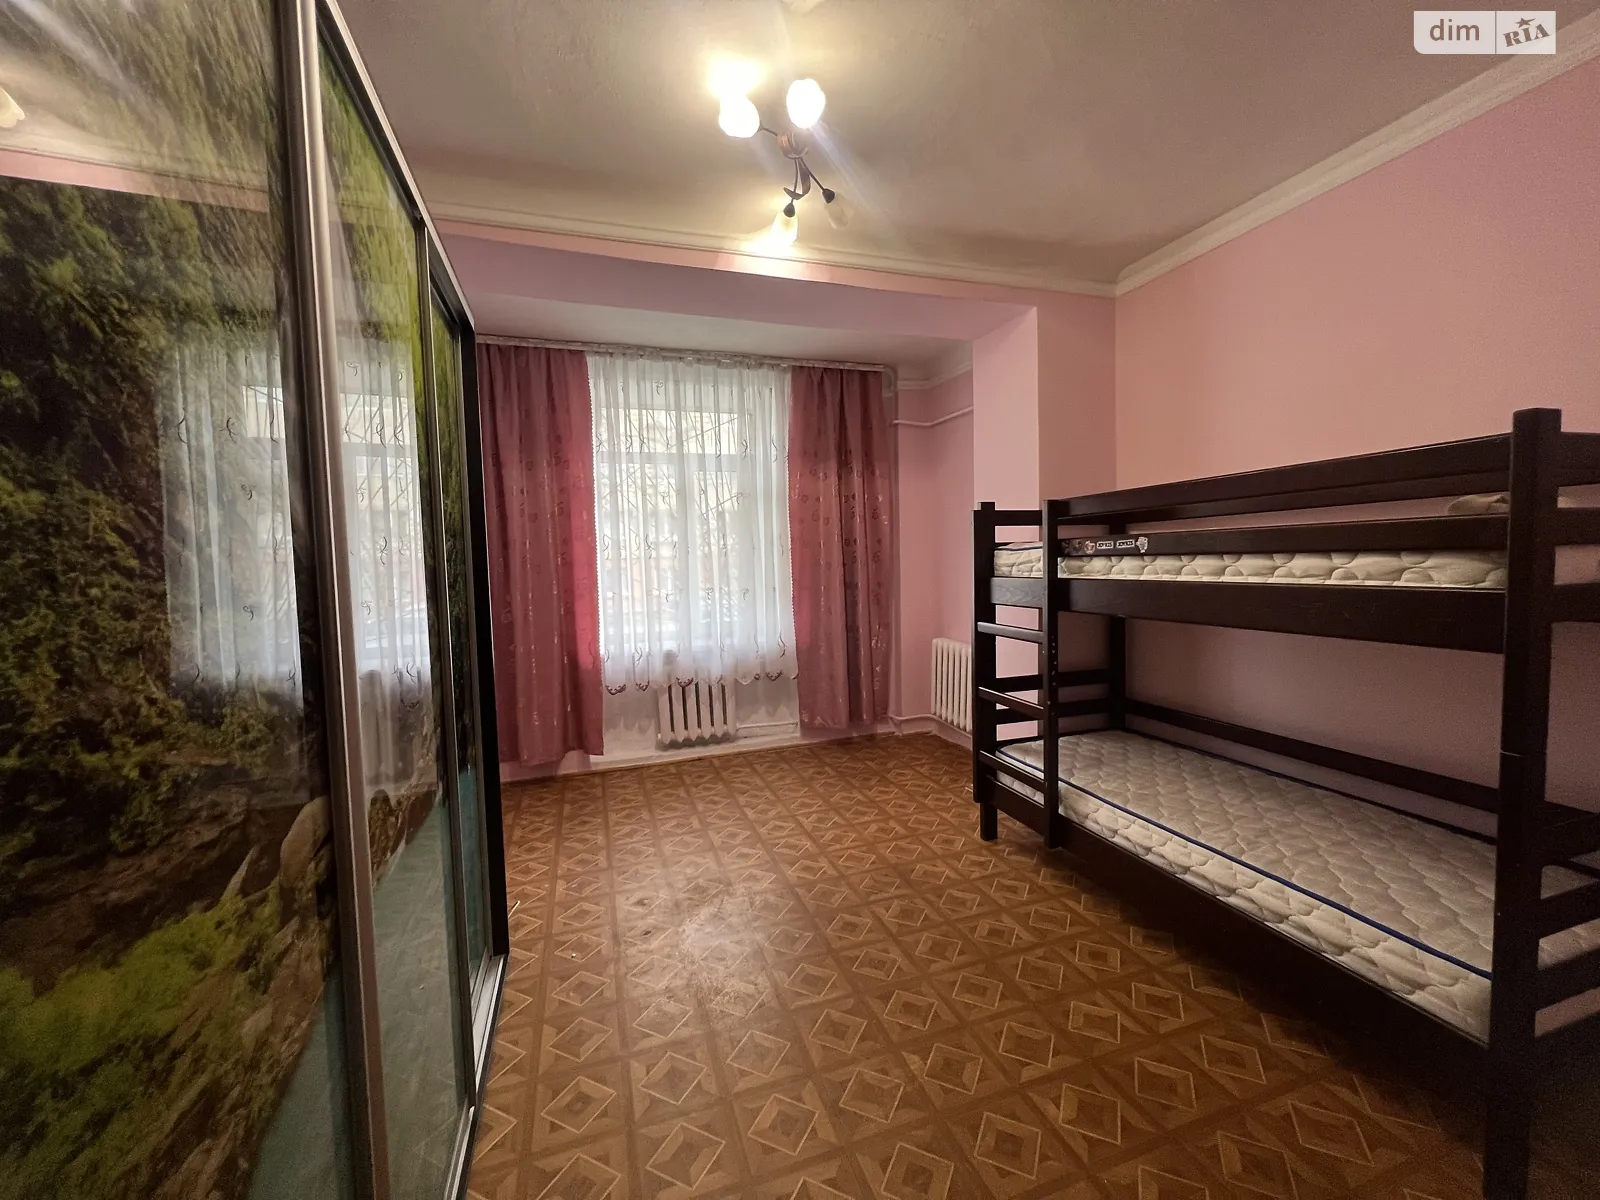 Сдается в аренду комната 20 кв. м в Тернополе, цена: 3000 грн